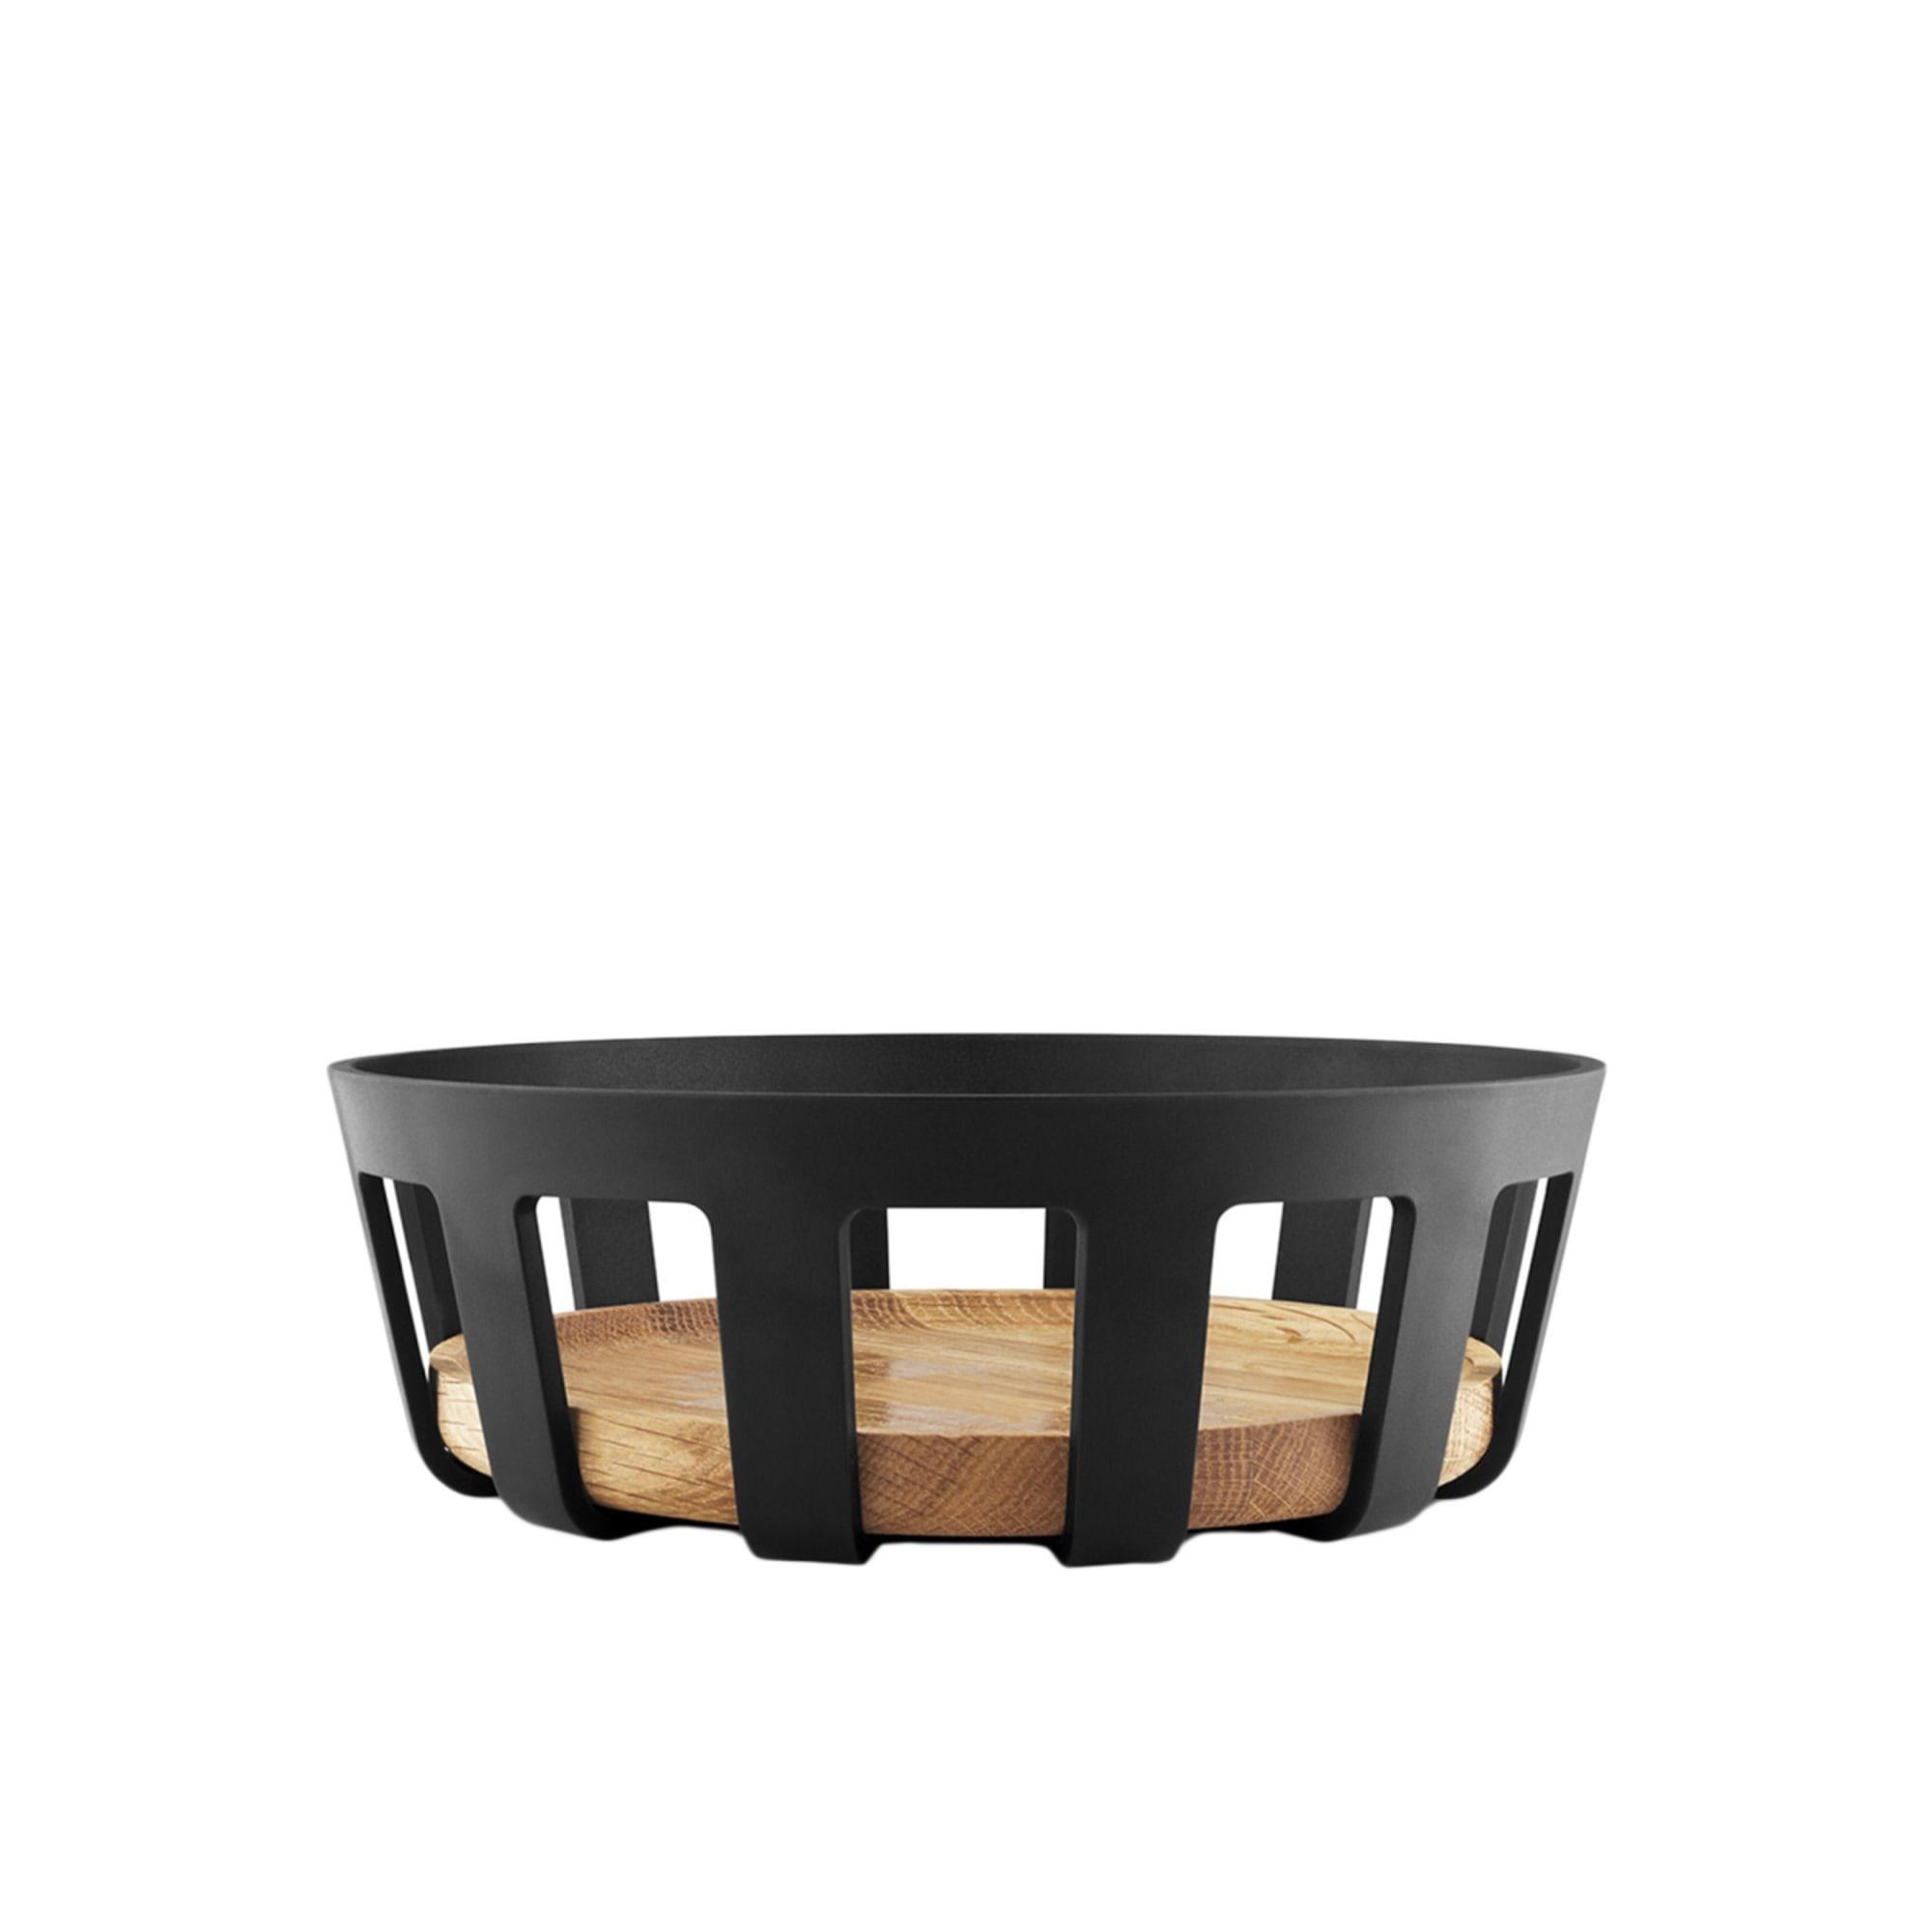 Eva Solo Nordic Kitchen Bread Basket 21 5cm Image 4